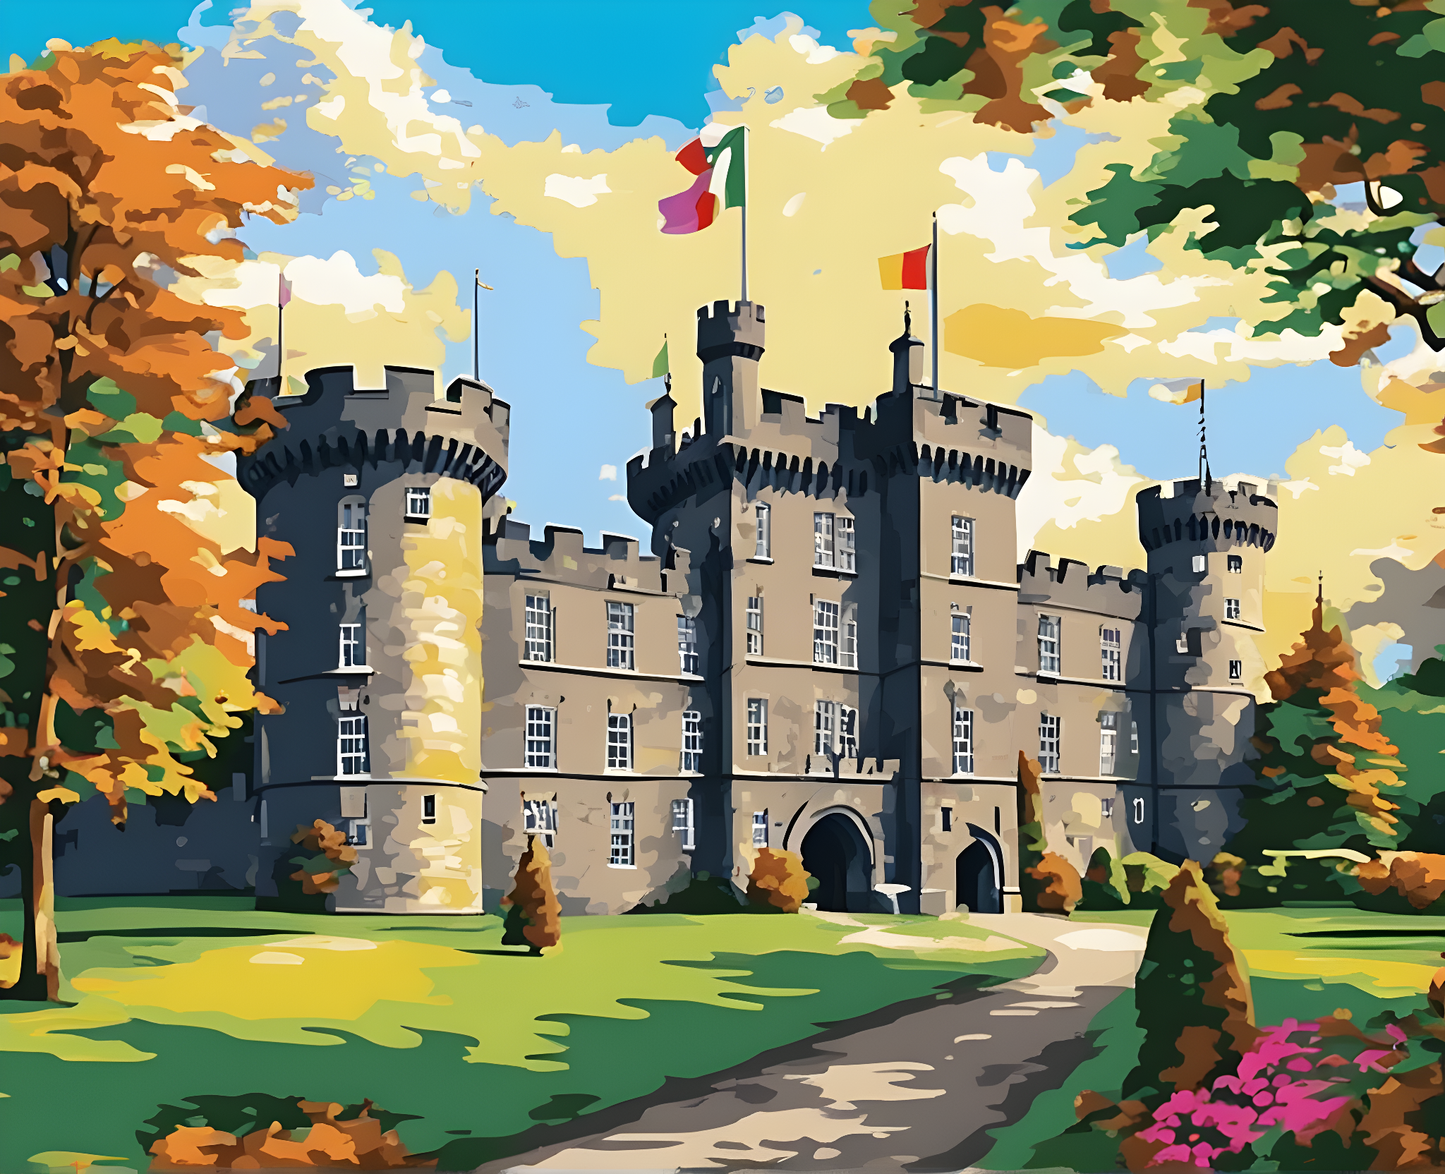 Castles OD - Kilkenny Castle, Ireland (38) - Van-Go Paint-By-Number Kit